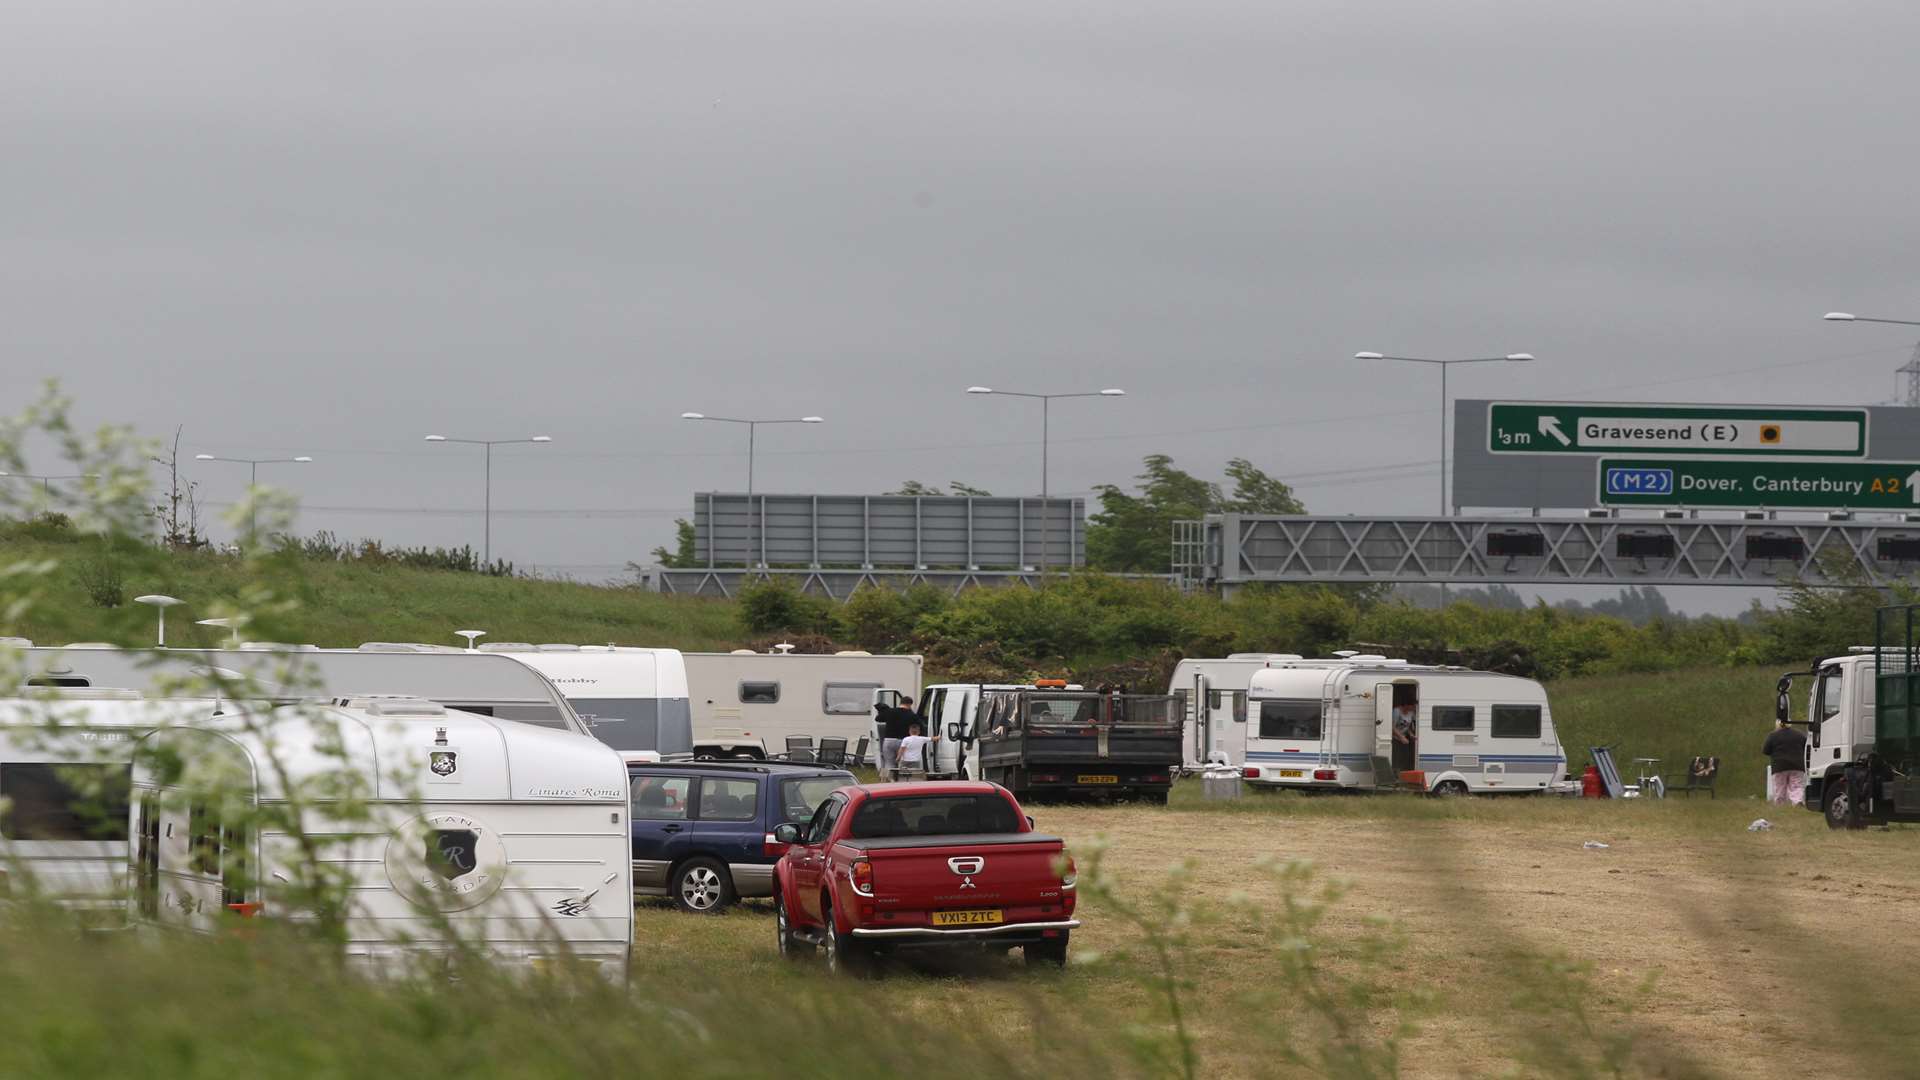 Around 25 caravans set up camp near the Cyclopark